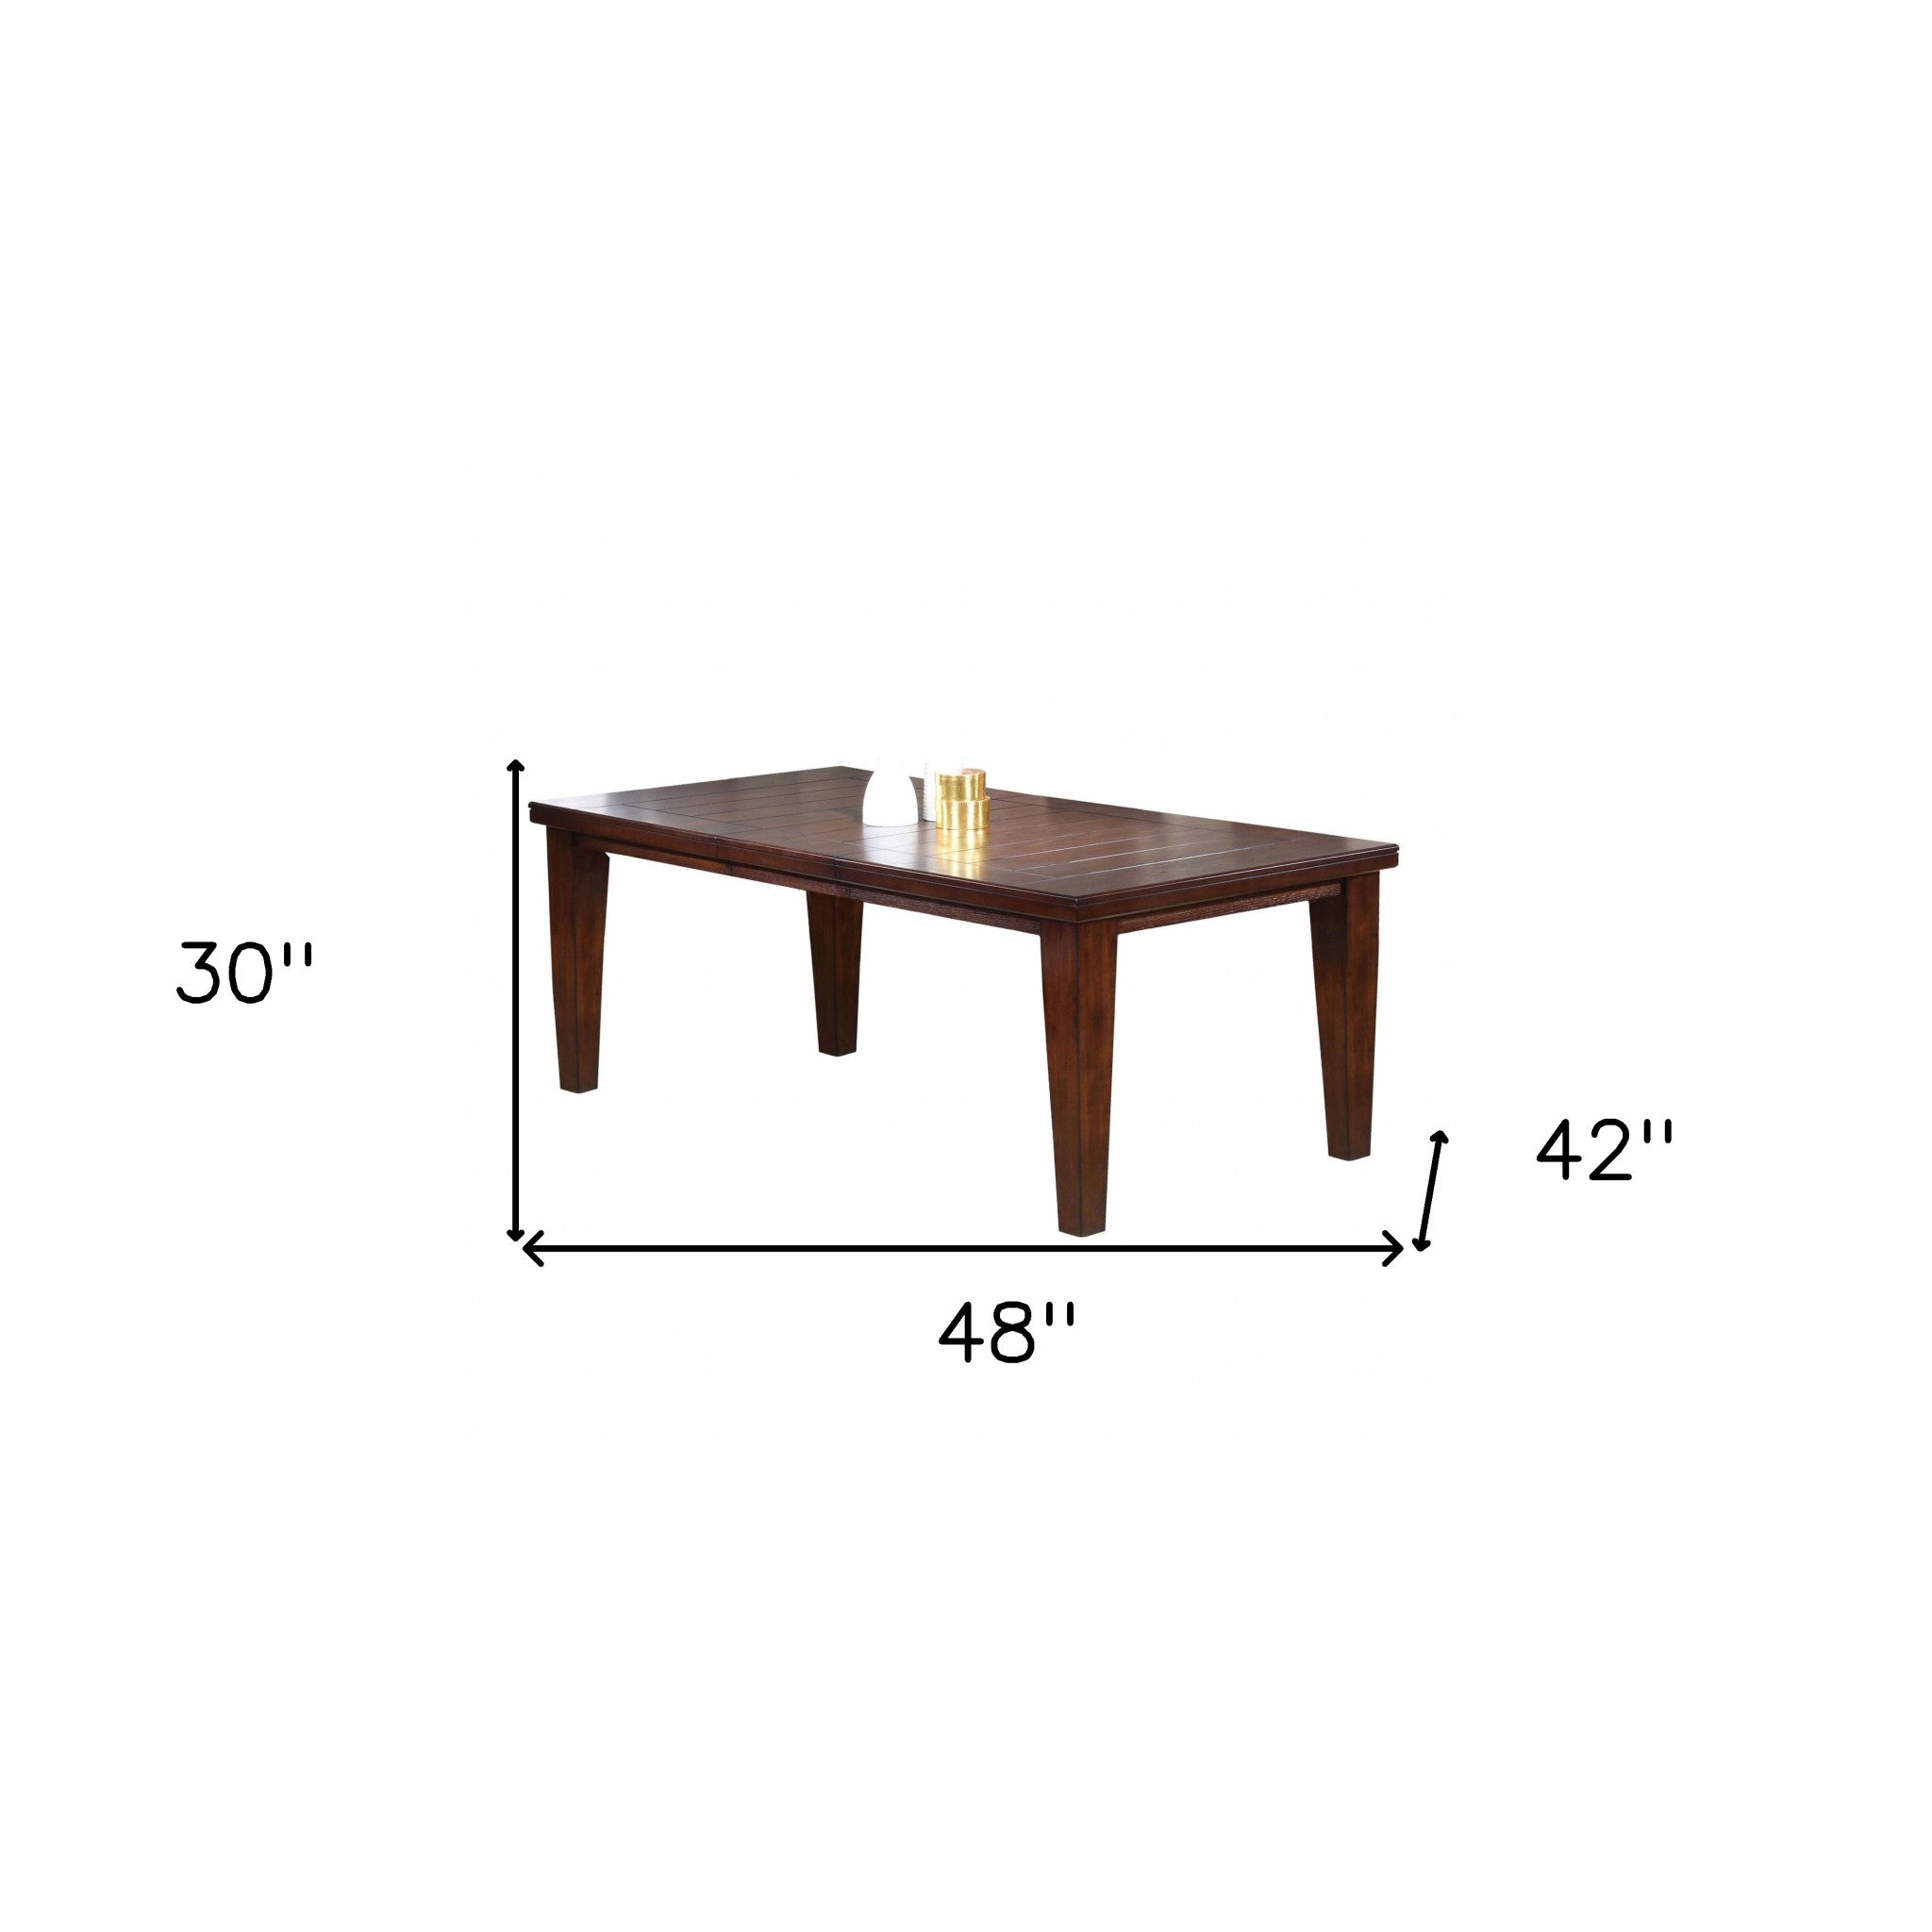 48" Dark Brown Dining Table